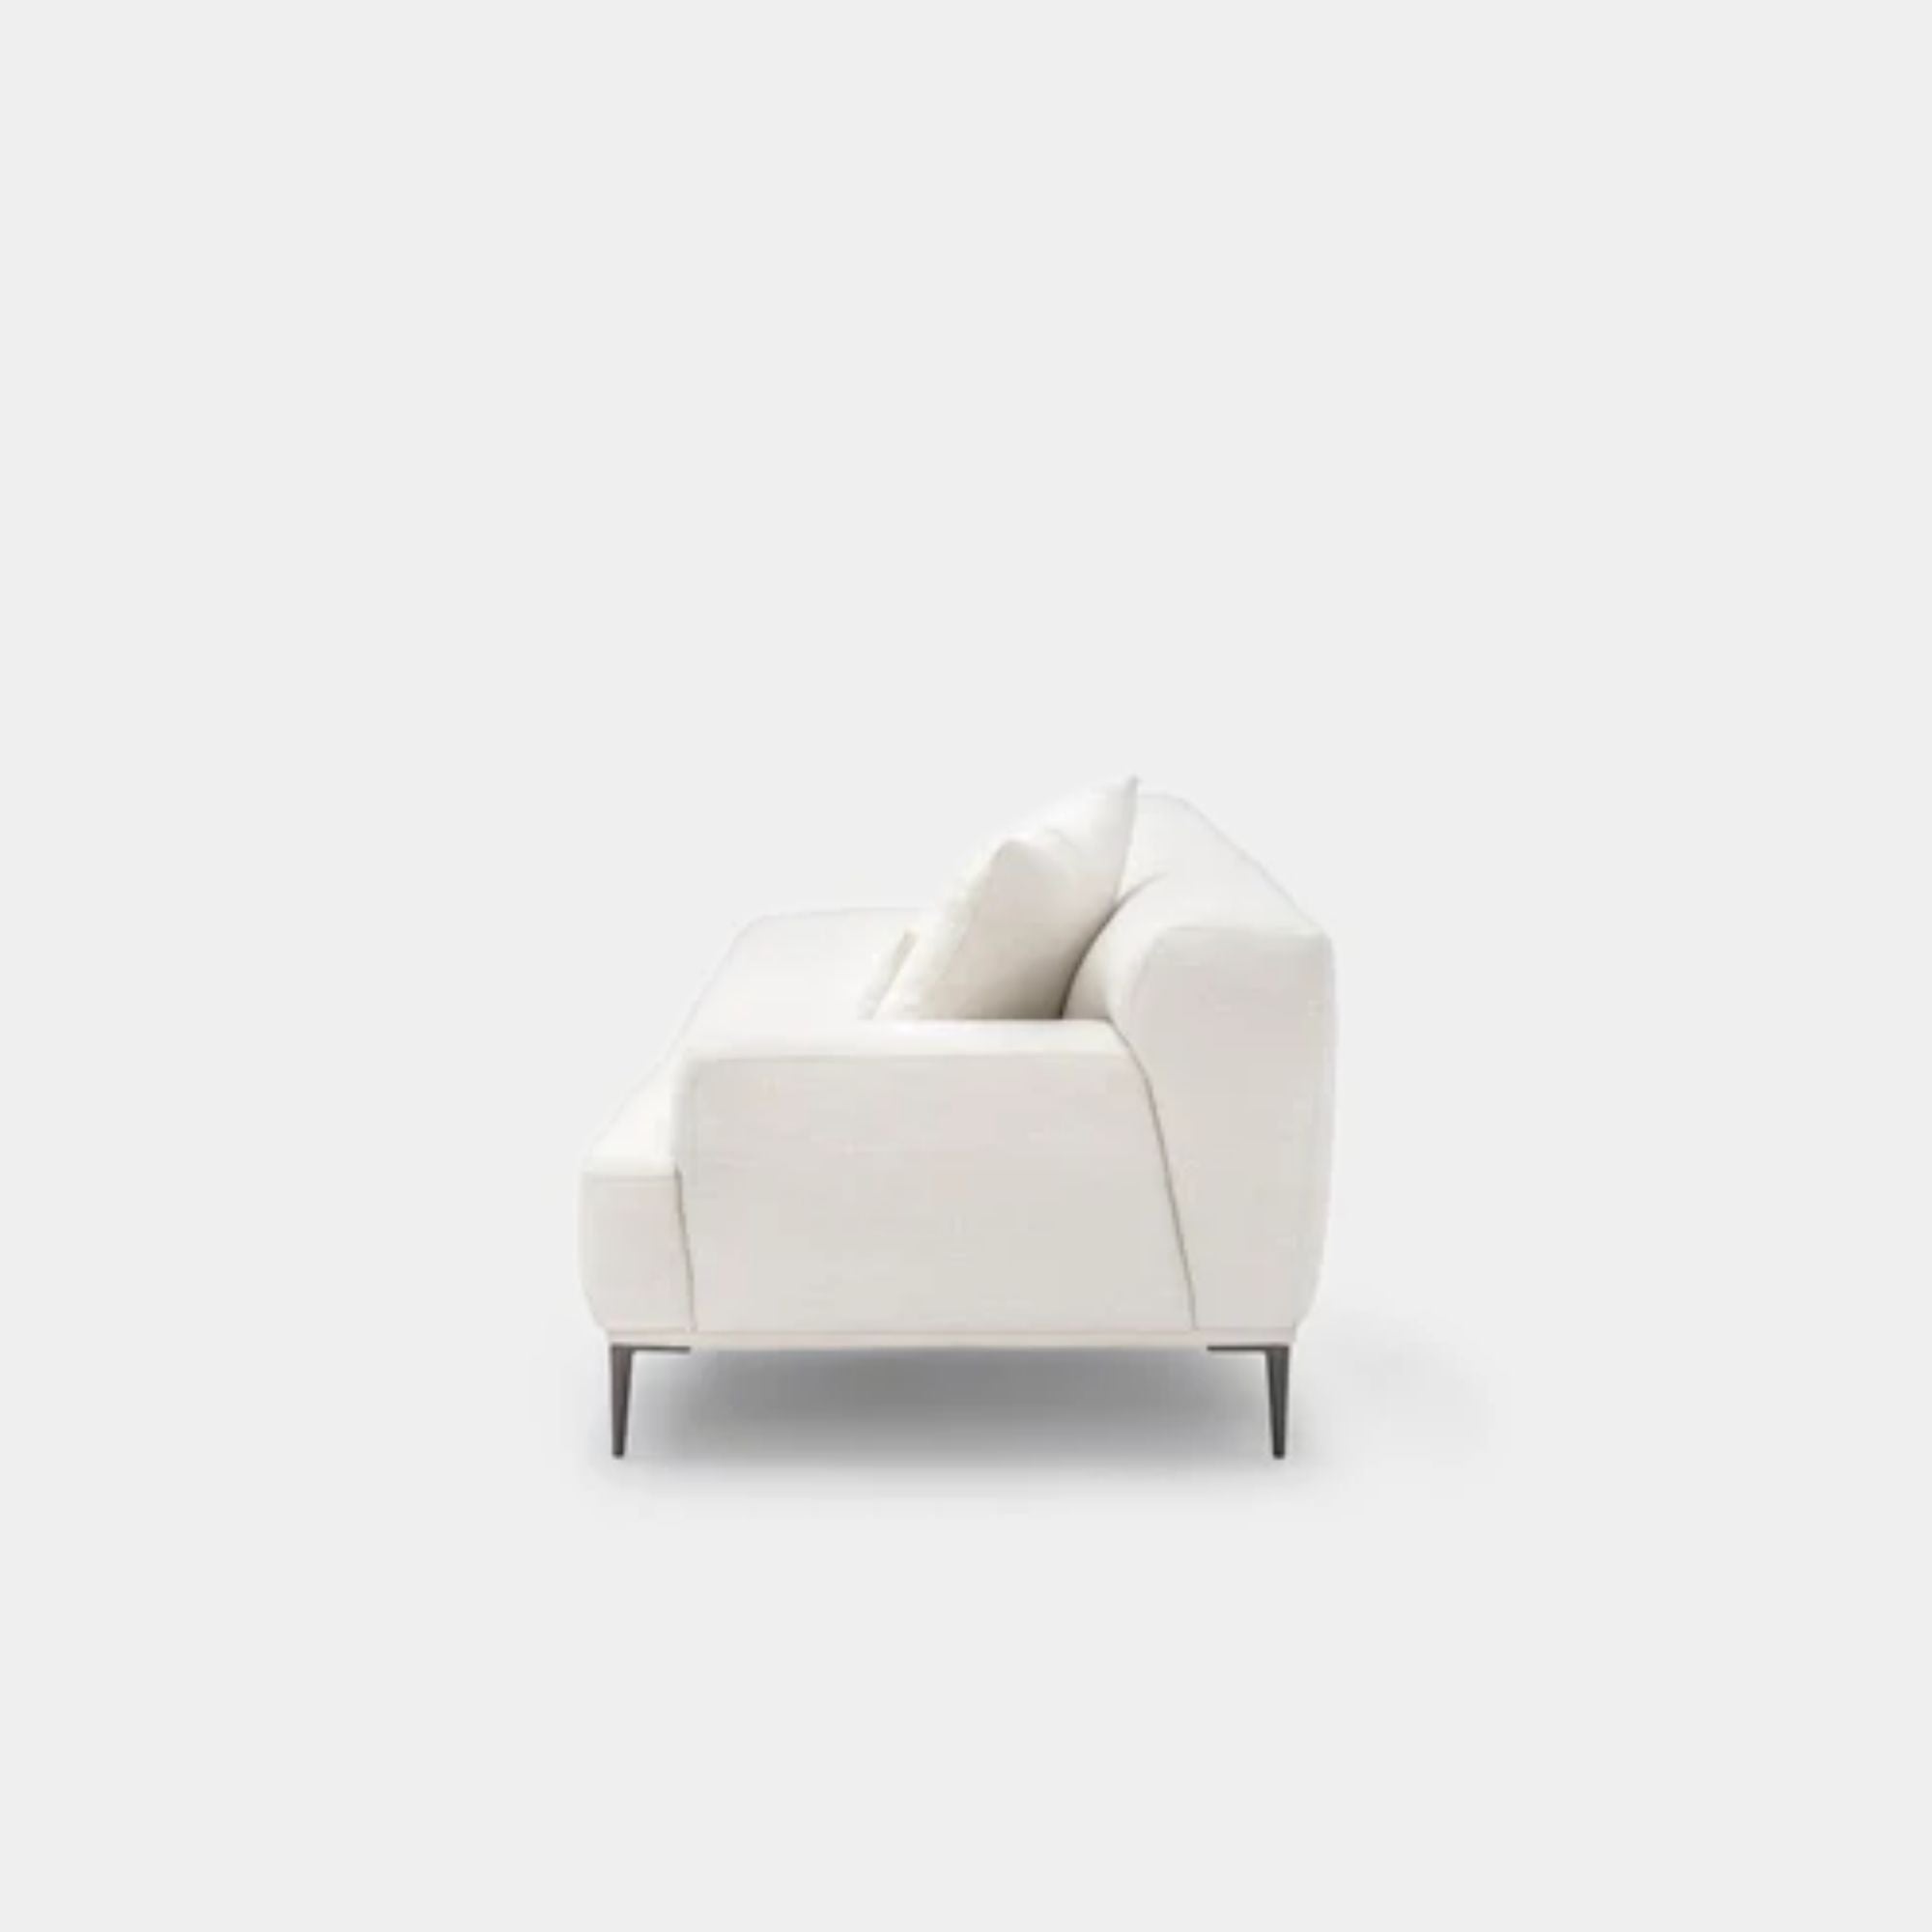 Crystal Fabric One Arm Sofa | 3 - 4 Seater | Singapore